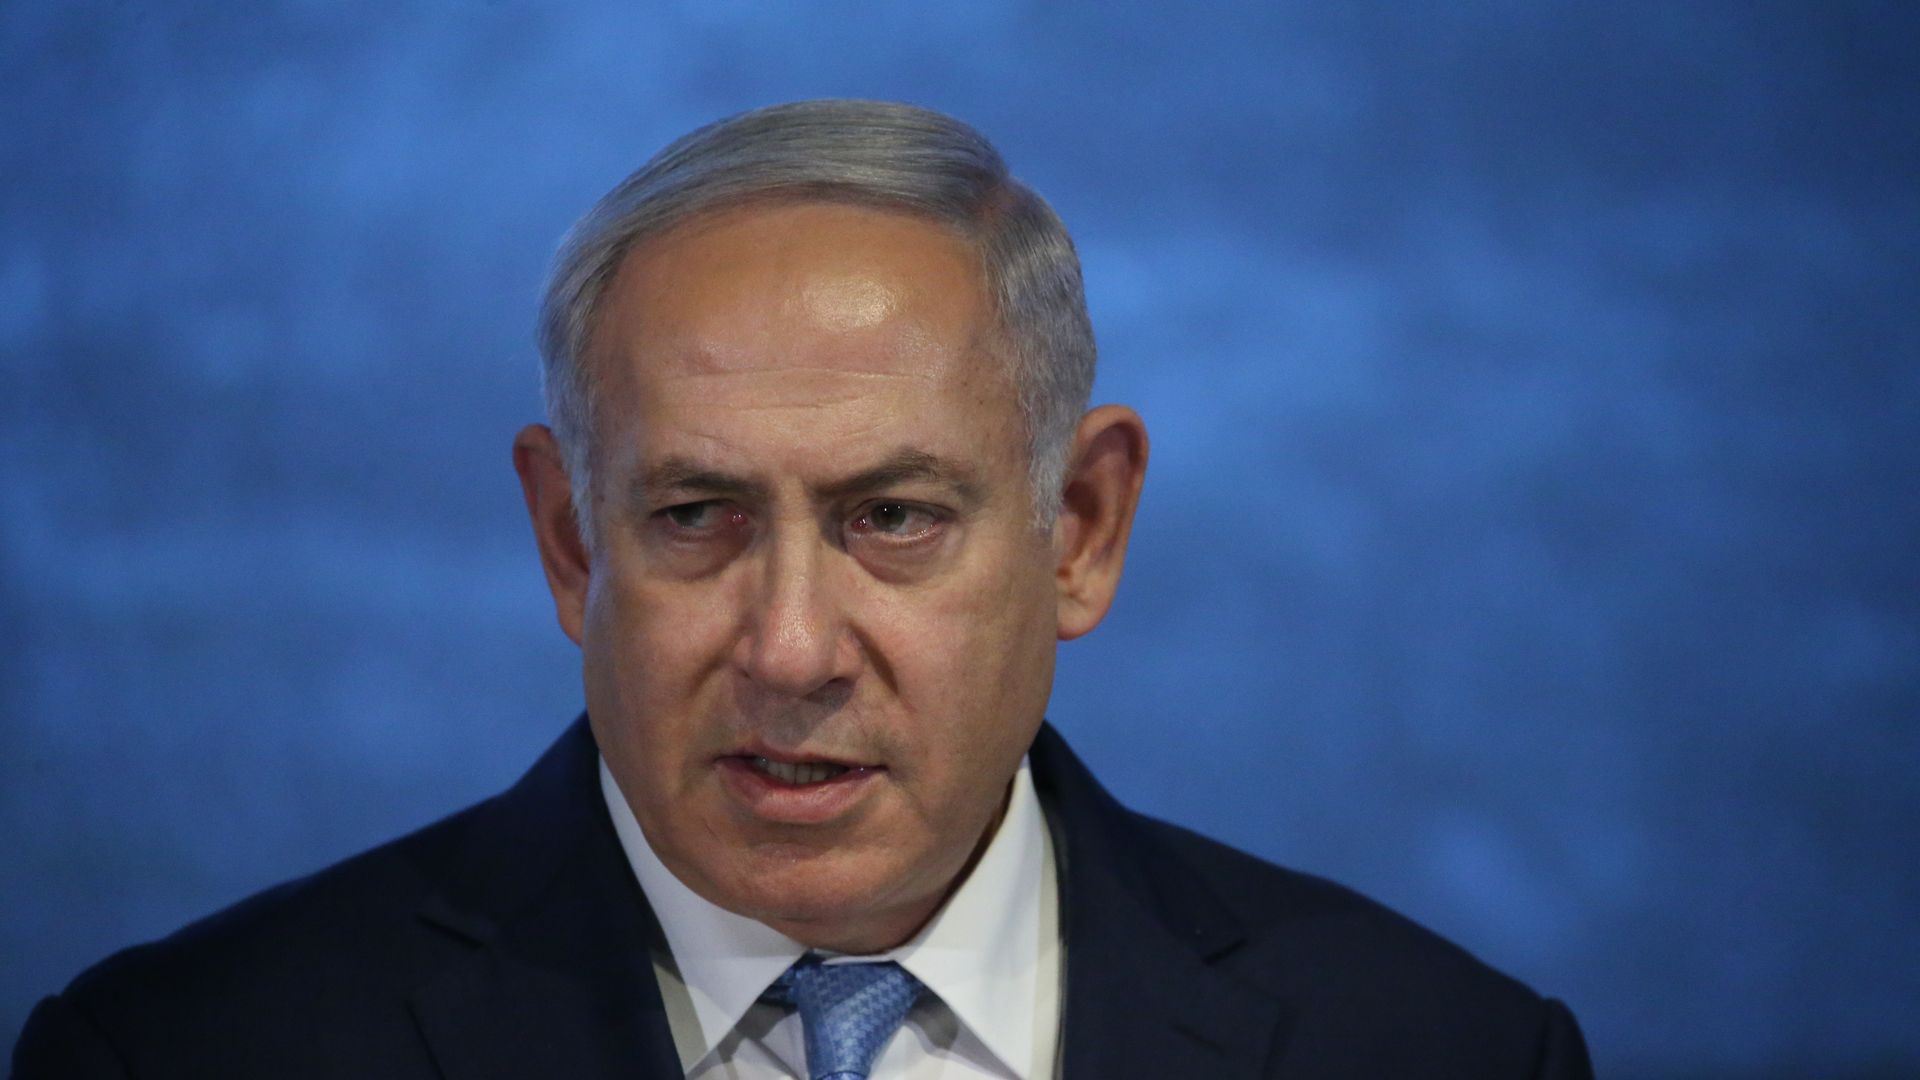 Benjamin Netanyahu before a blue backdrop.